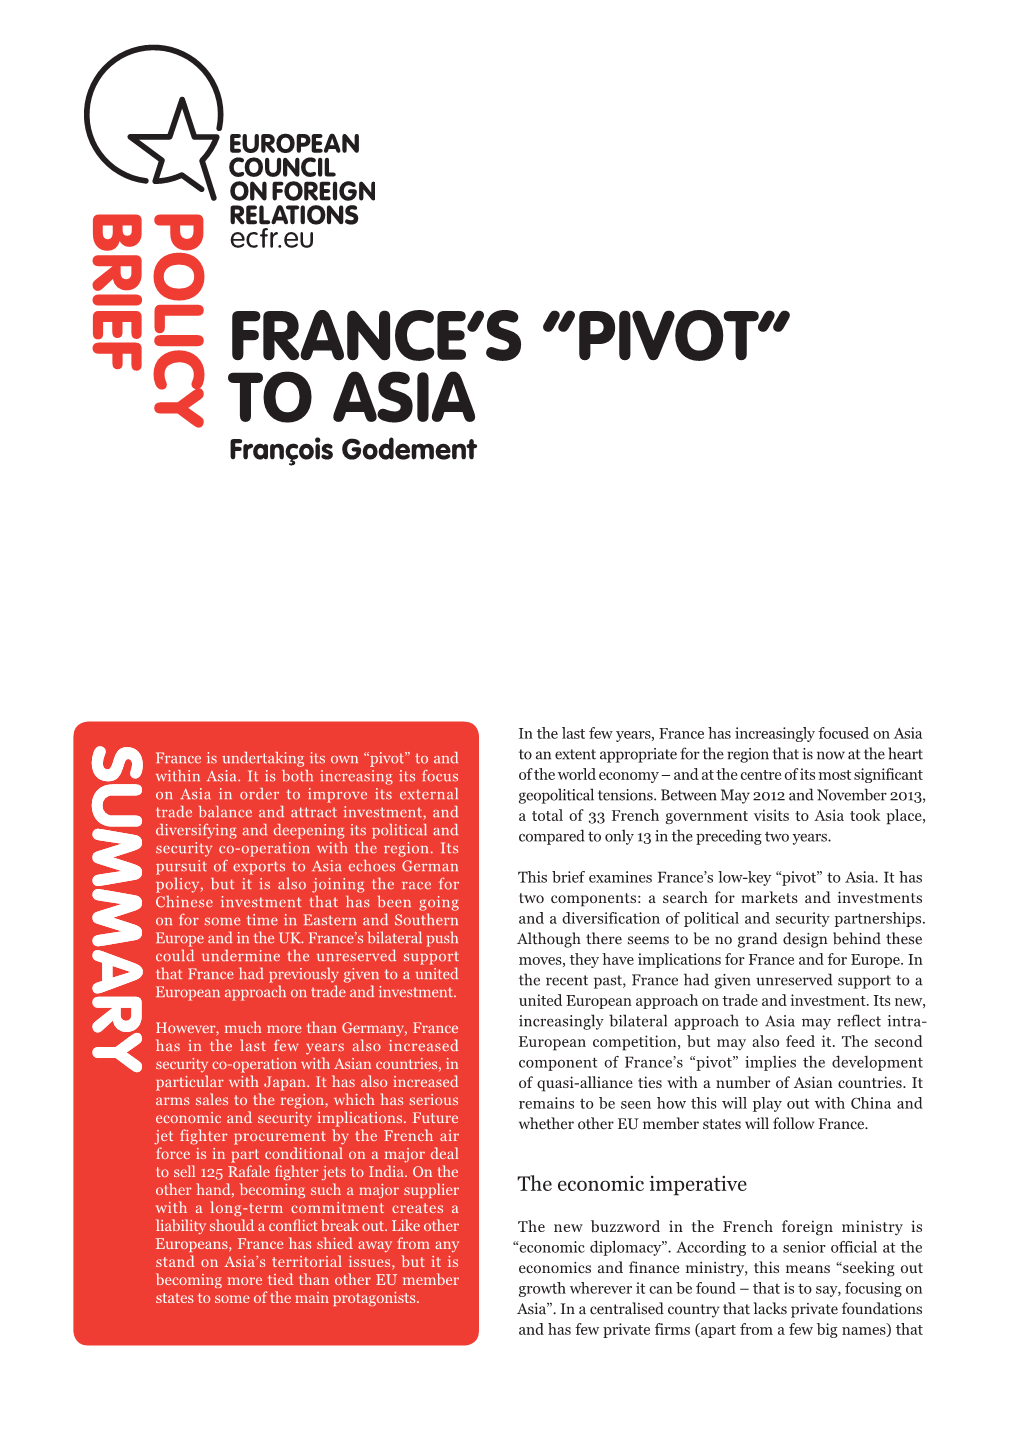 France's "Pivot" to Asia